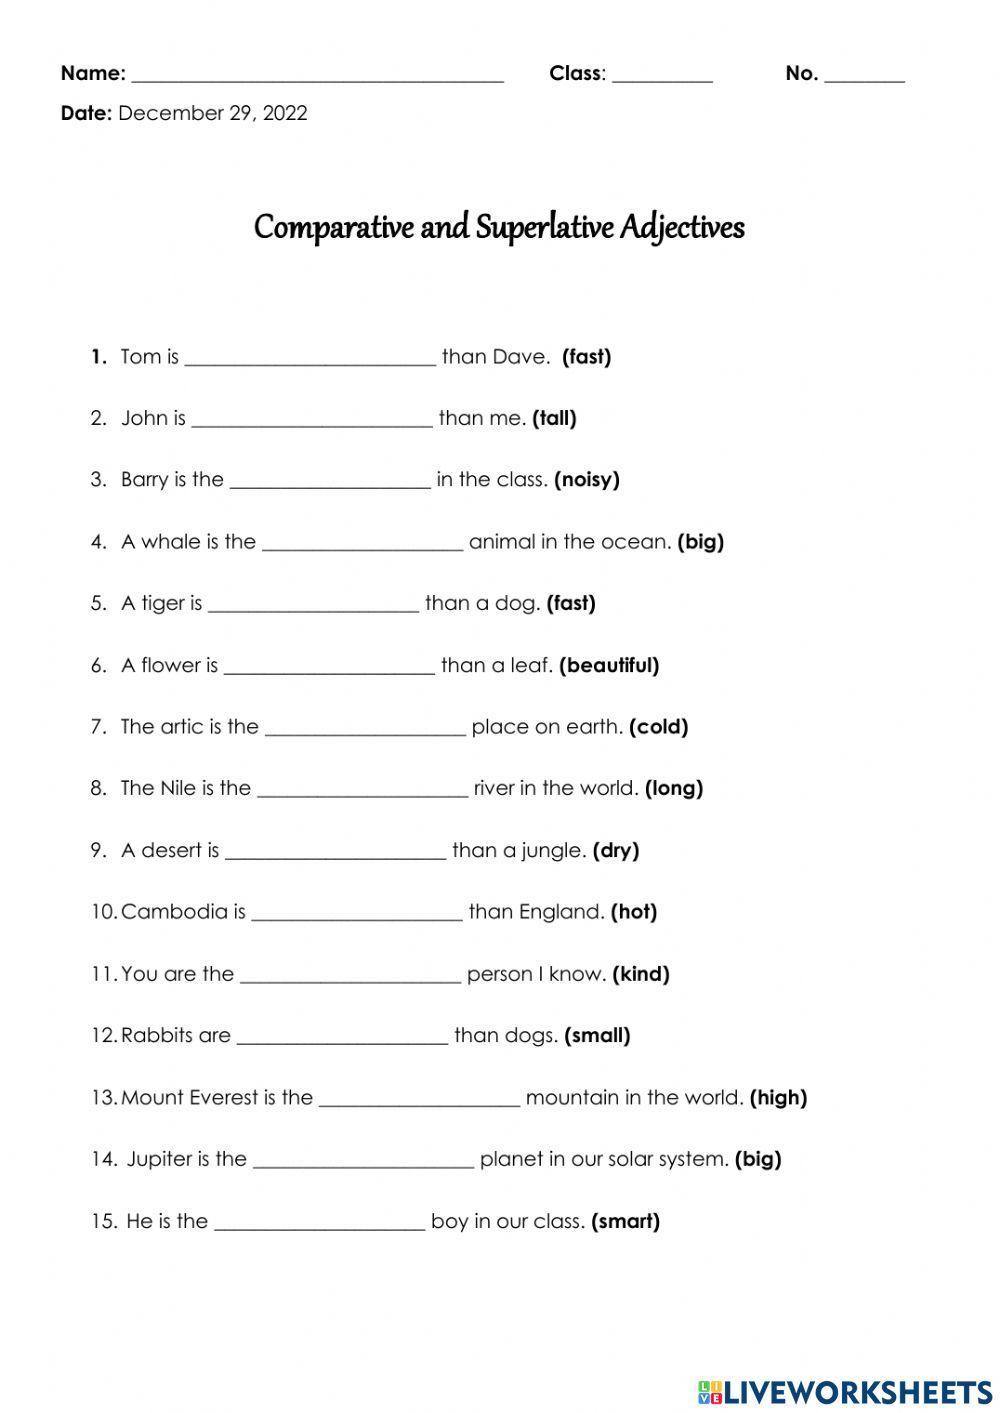 Comparative and Superlative Adjective Worksheet